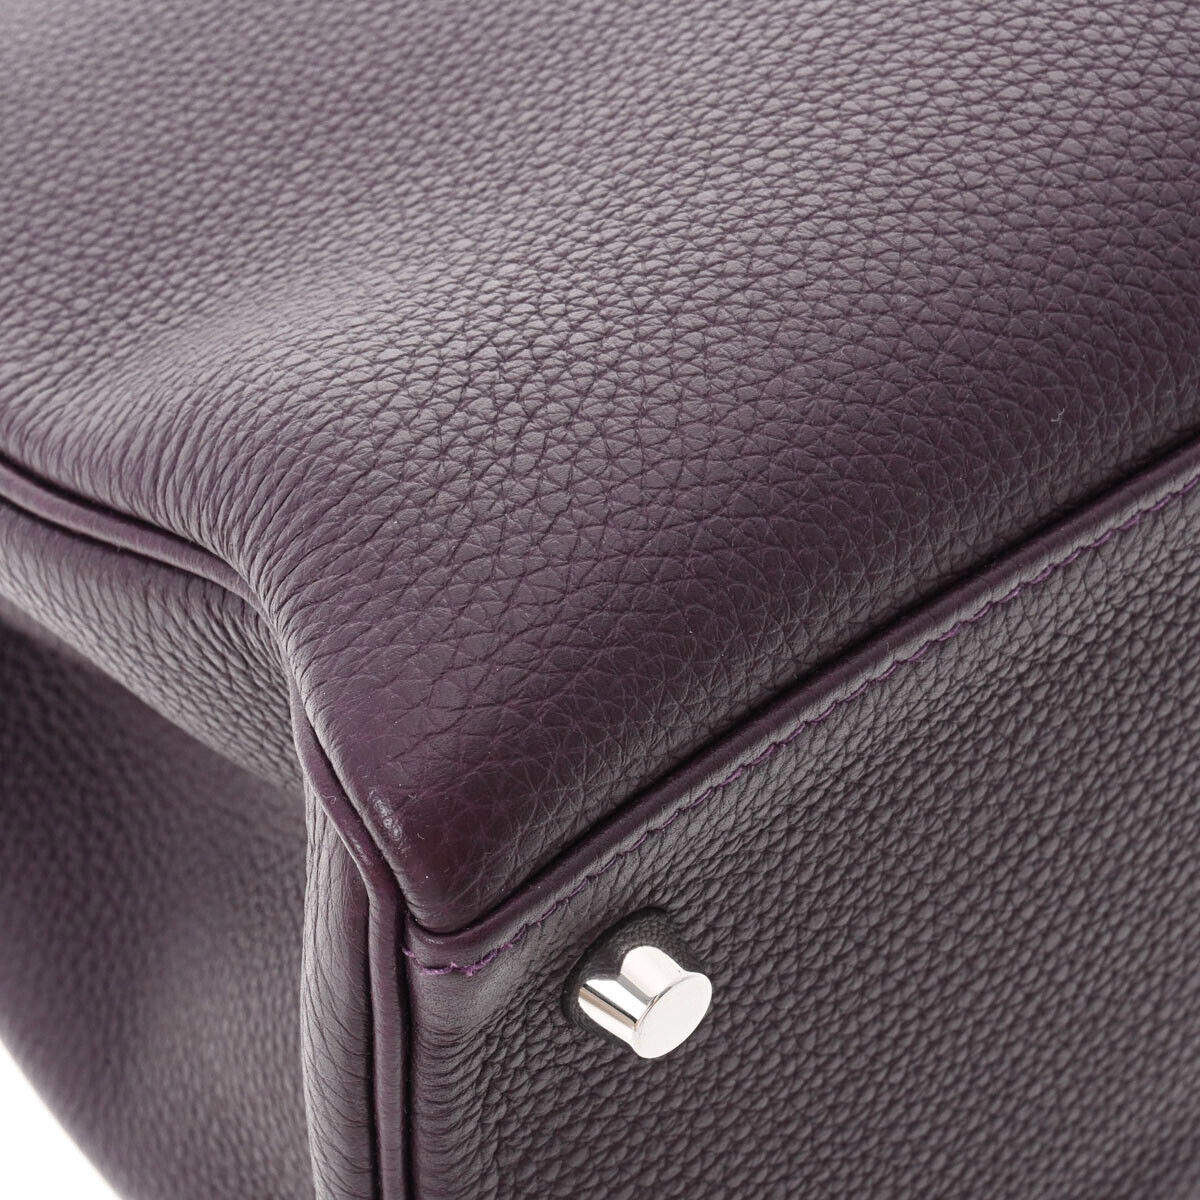 Hermes Kelly Handbag Purple Togo with Palladium Hardware 28 Purple 2066215